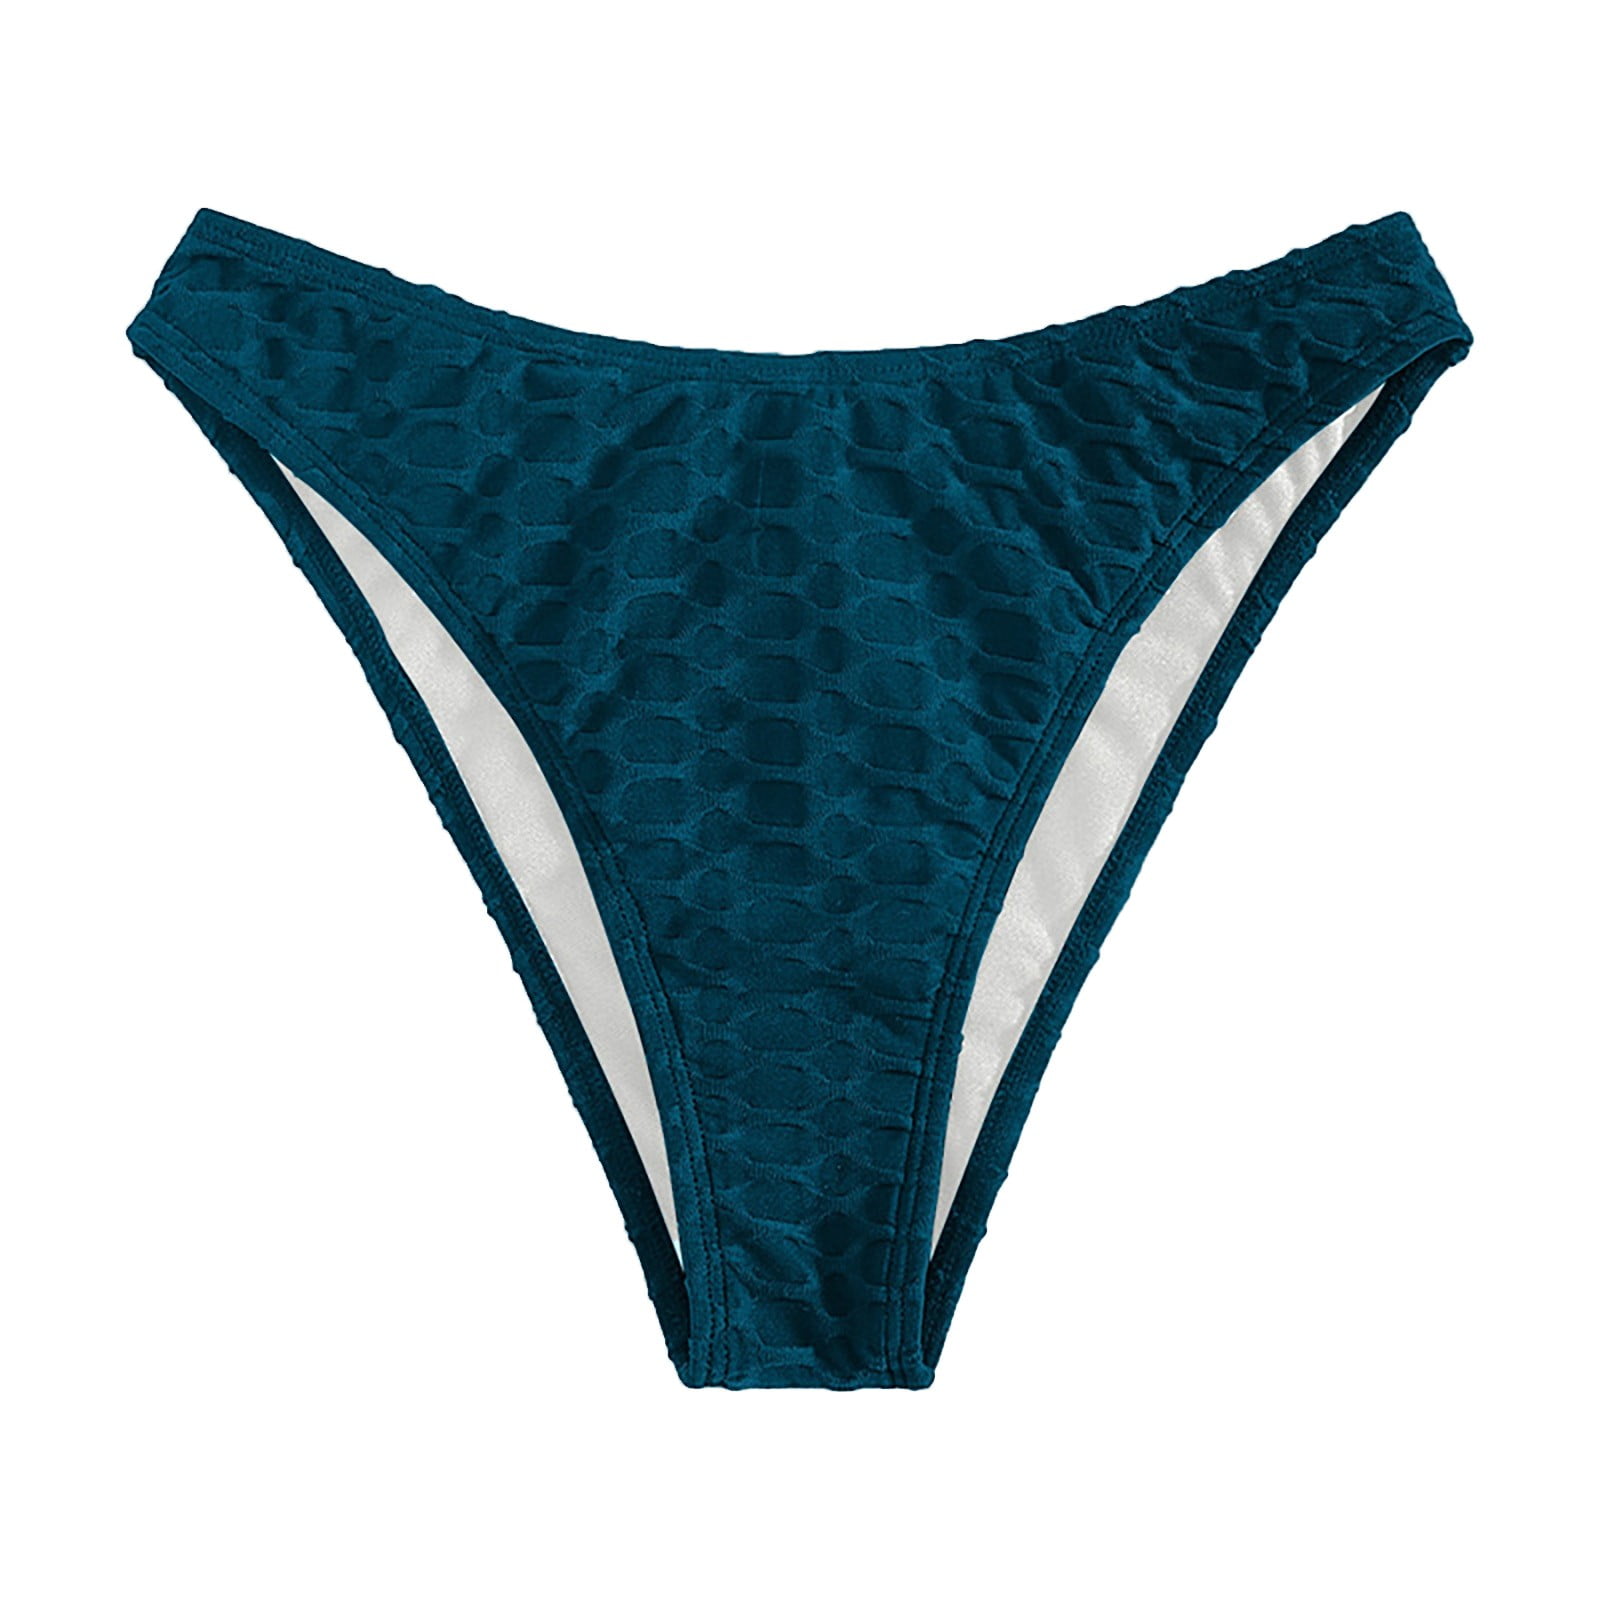 Baycosin Women's High Cut Swimwear Solid Color Beach Bikini Panty for ...